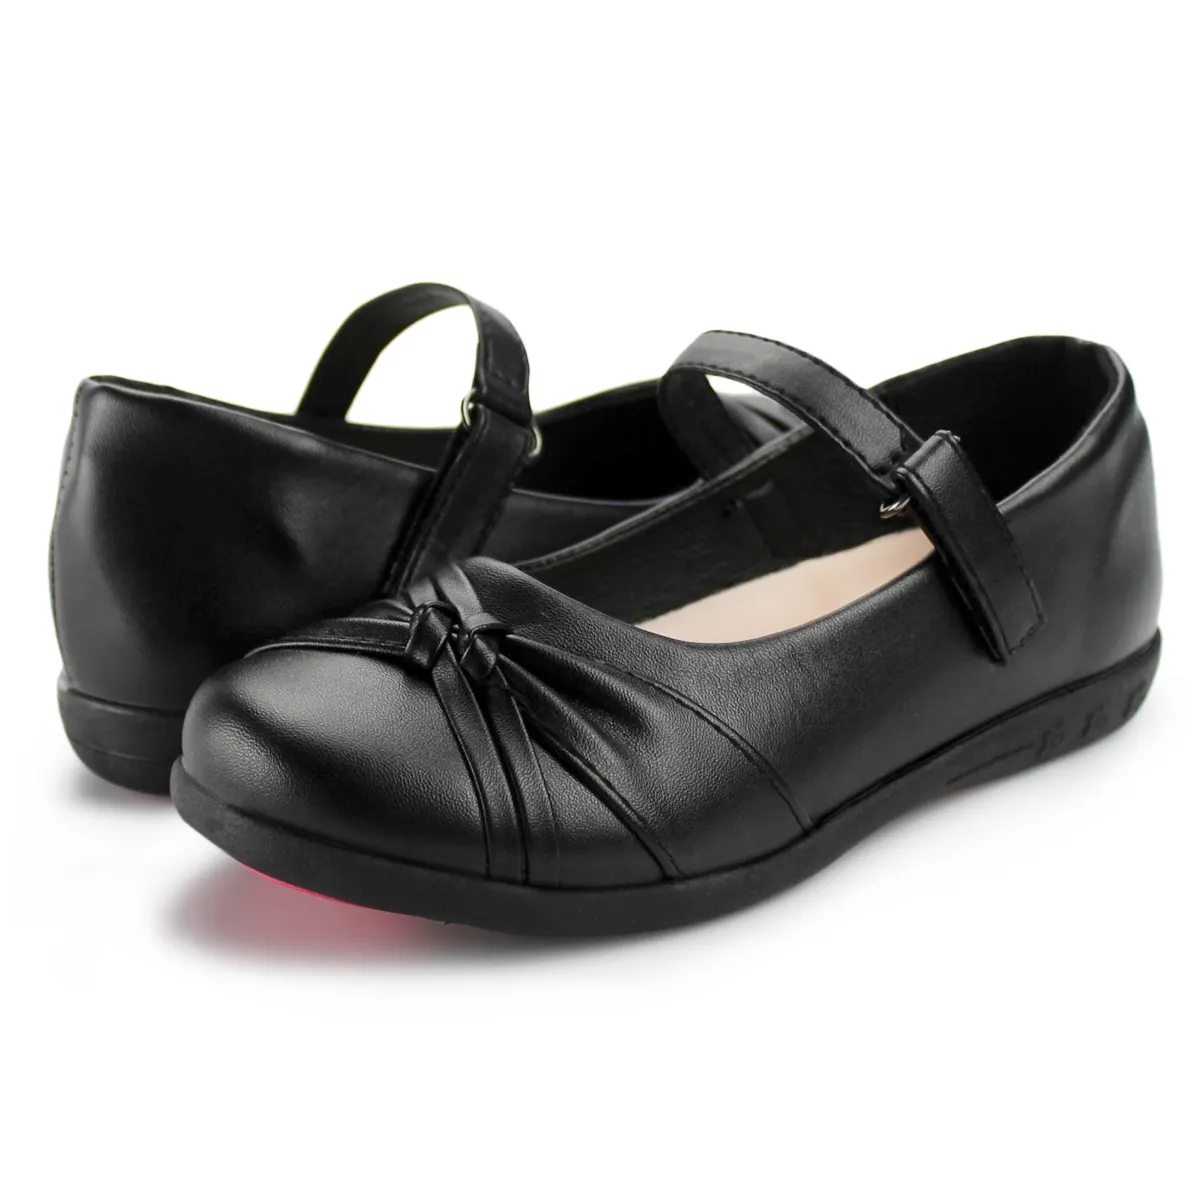 Professional New Mary Jane Flat Girl School Shoes Black Uniform Shoes